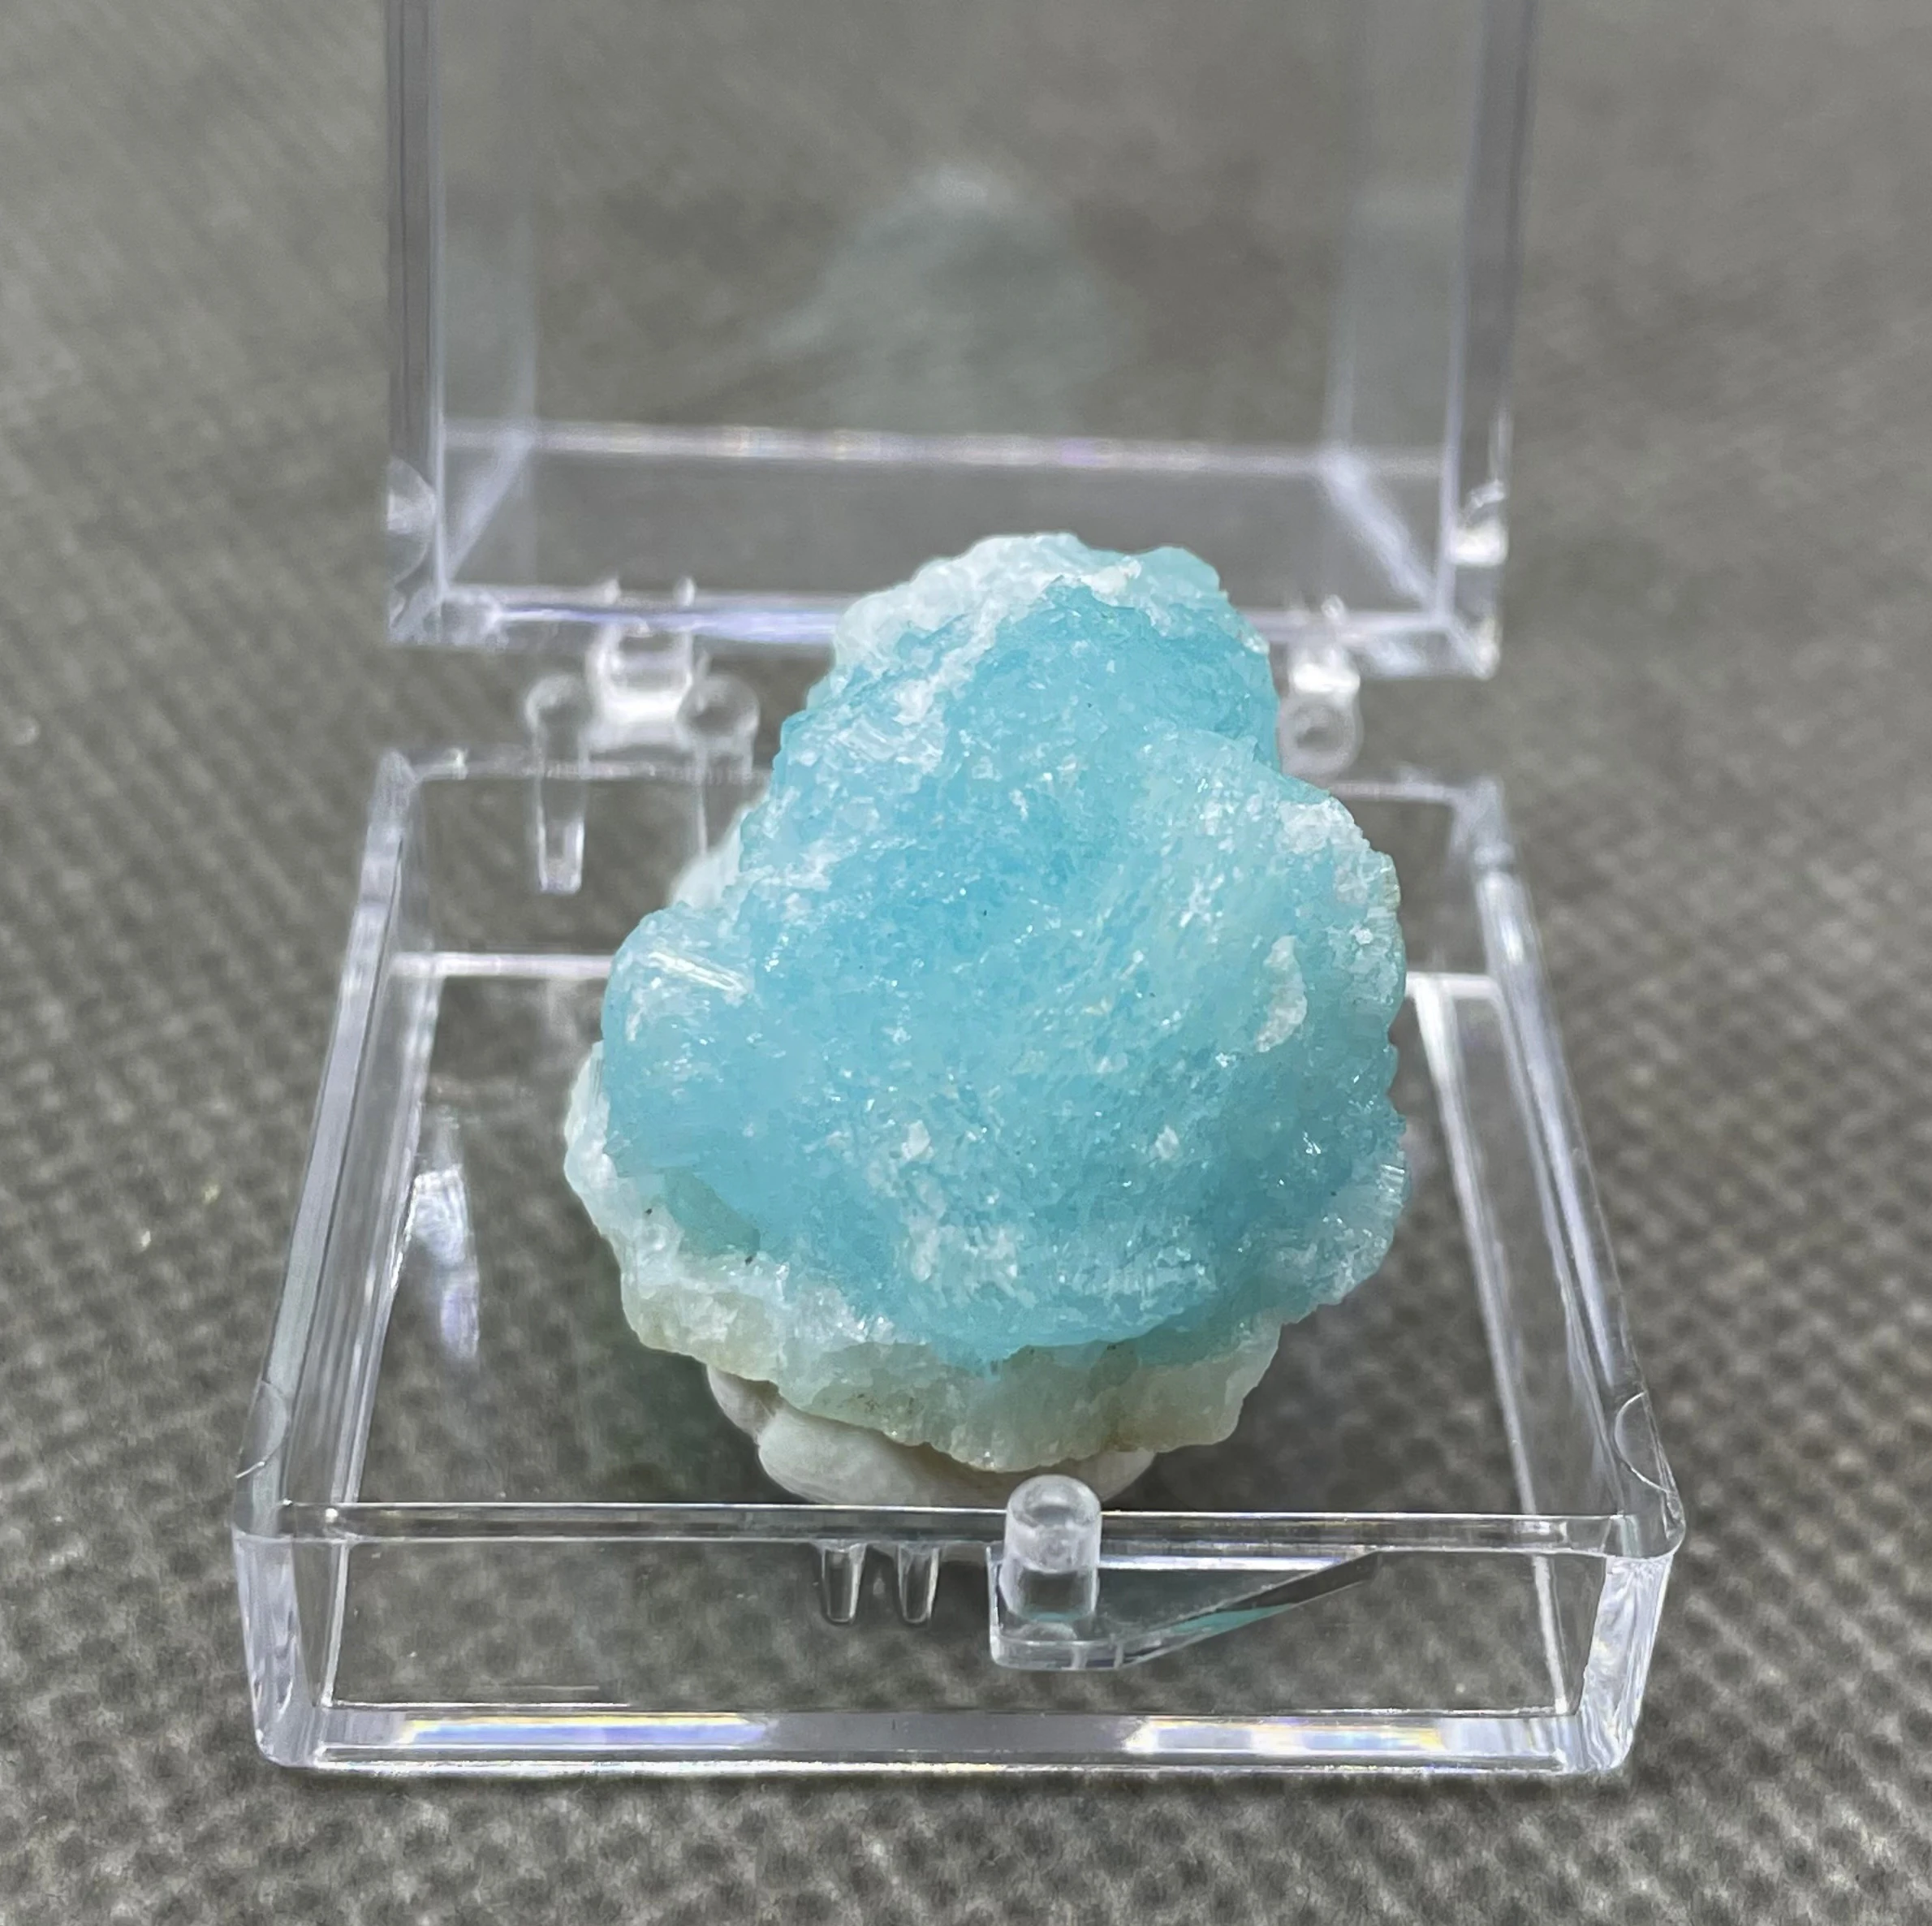 NEW! 100% natural Blue Aragonite minerals specimen stones and crystals healing crystals quartz  from China (box size 3.4cm)